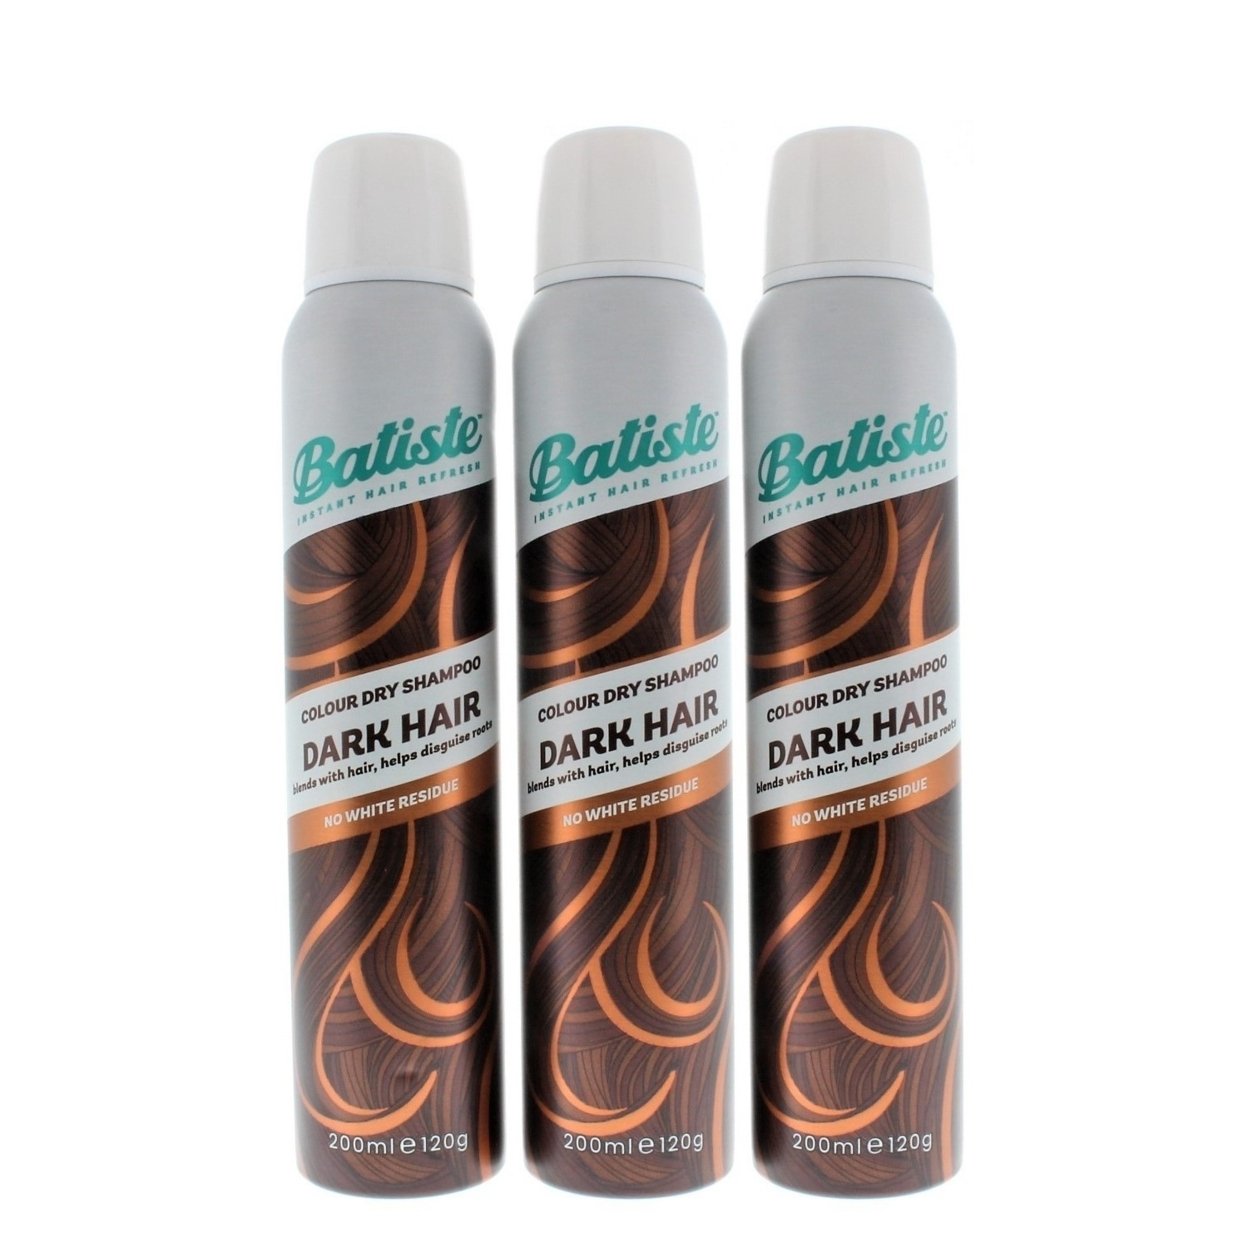 Batiste Instant Hair Refresh Colour Dry Shampoo Dark Hair 200ml/120g (3 PACK)